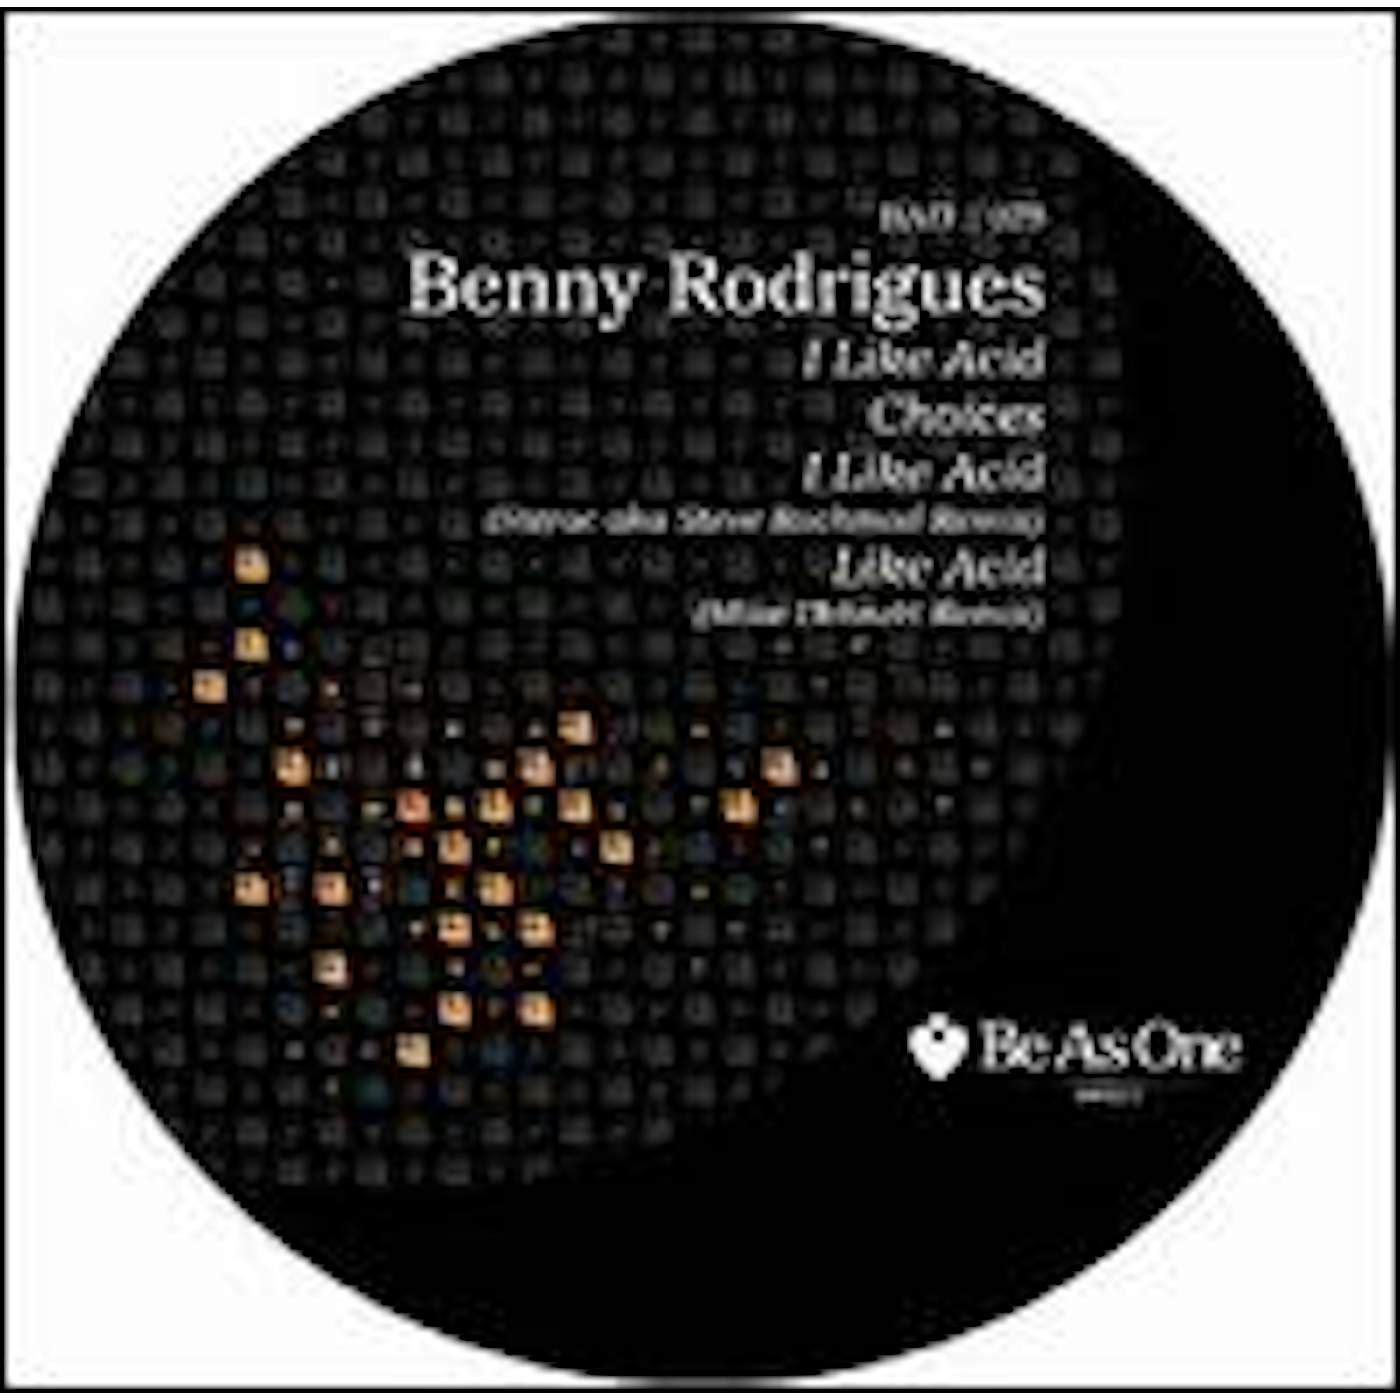 Benny Rodrigues I Like Acid Vinyl Record